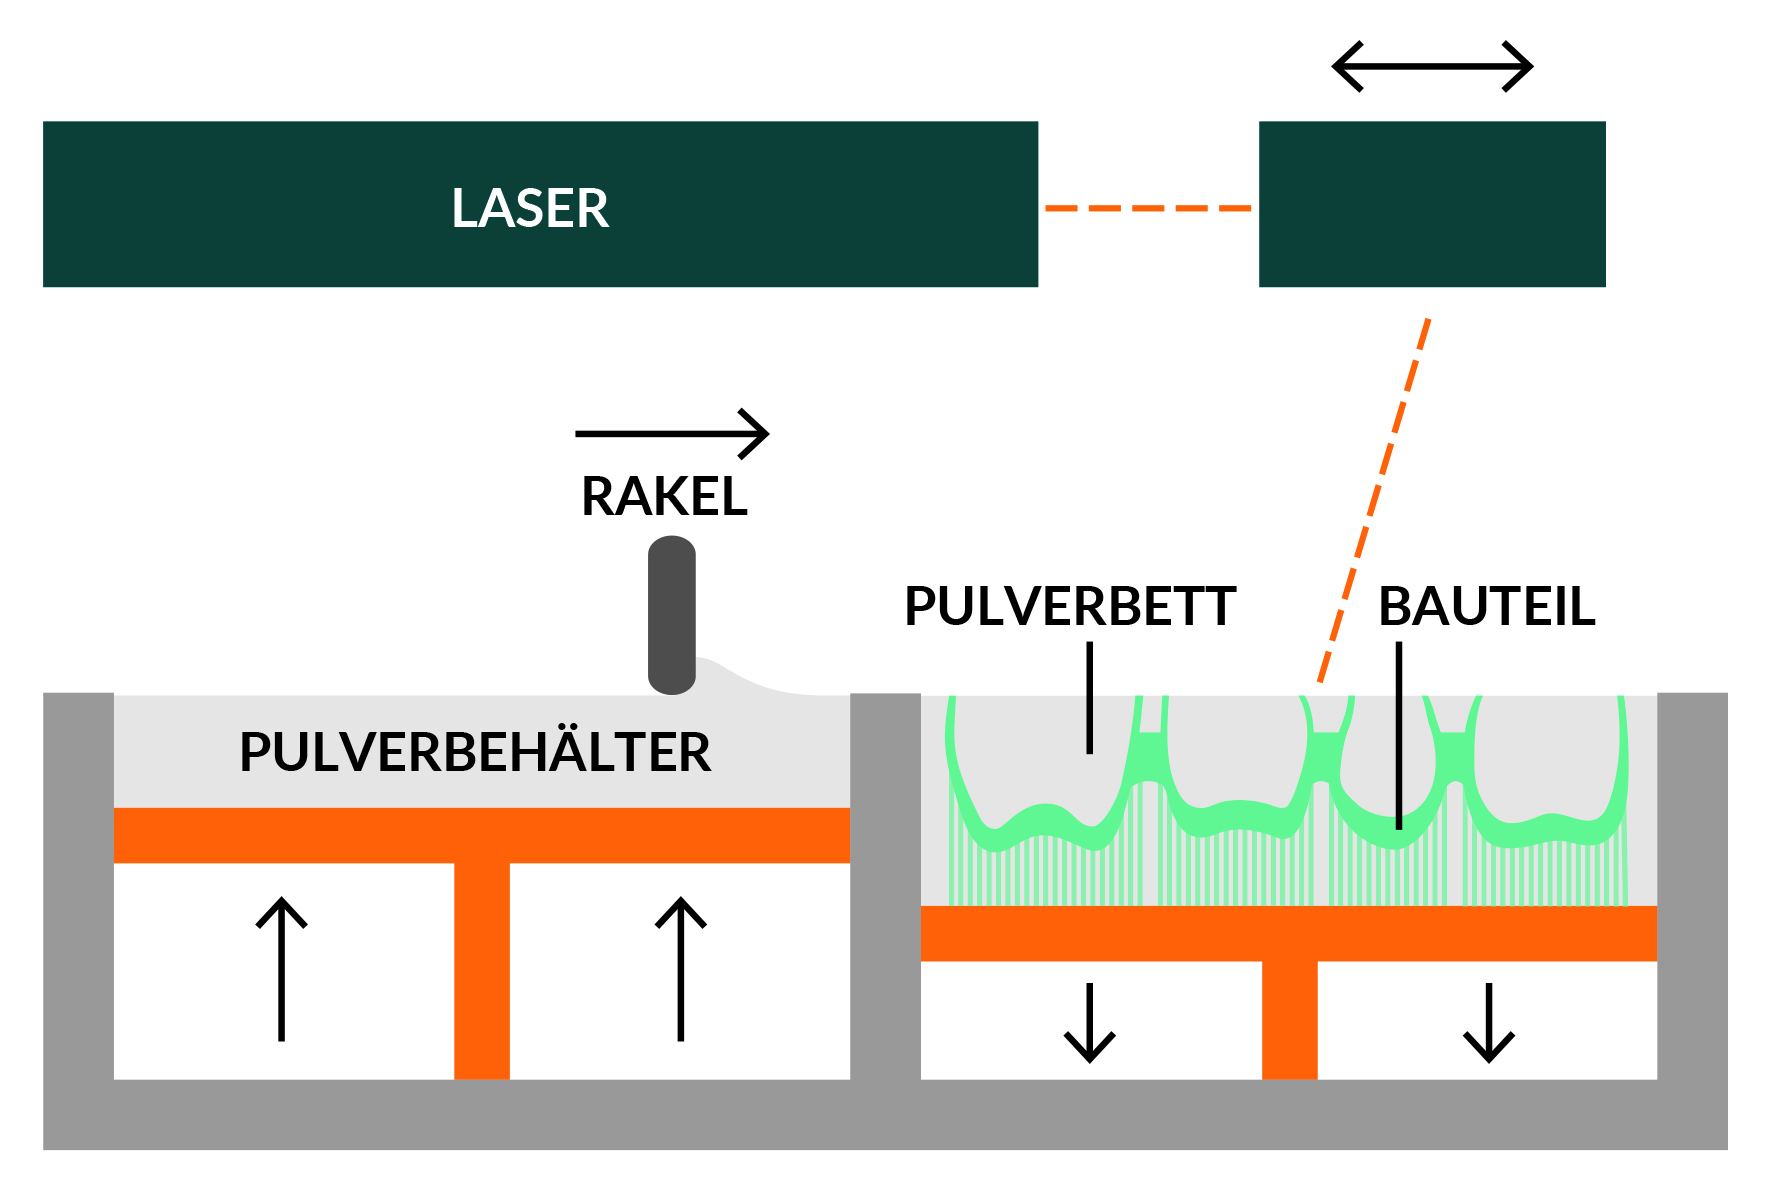 Struttura metallica in LaserMelting (sinistra) vs. struttura metallica in Laser Sintering (destra)